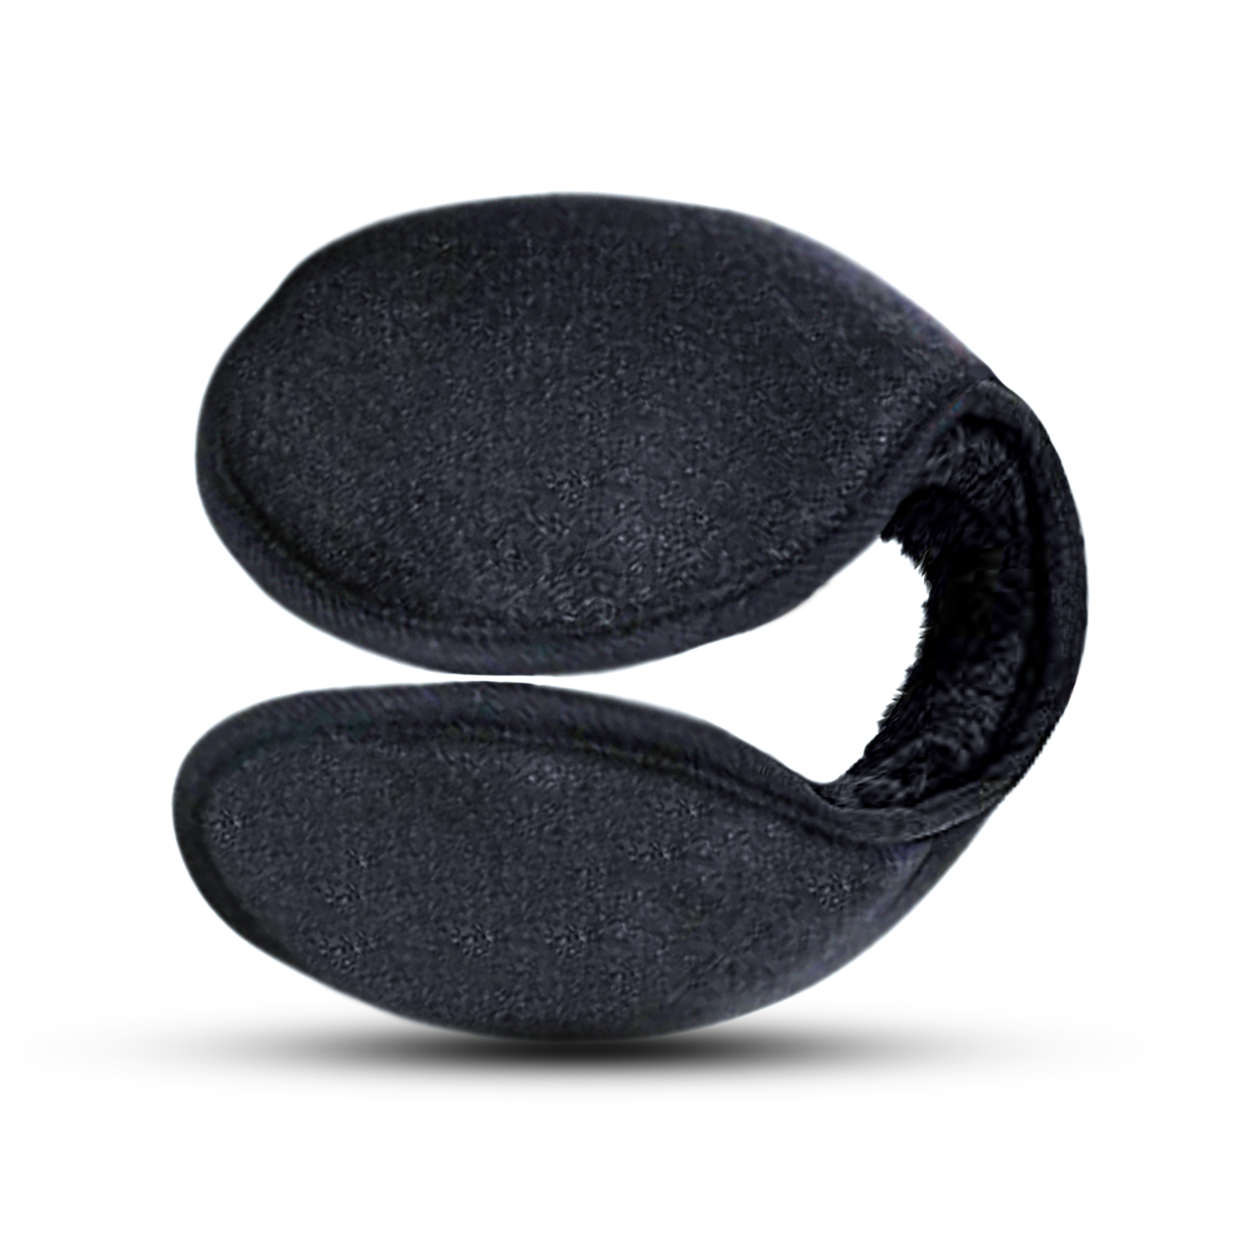 4 Pack: Unisex Ultra-Plush Fur Lined Winter Windproof Plush Behind Head Earmuffs - Black